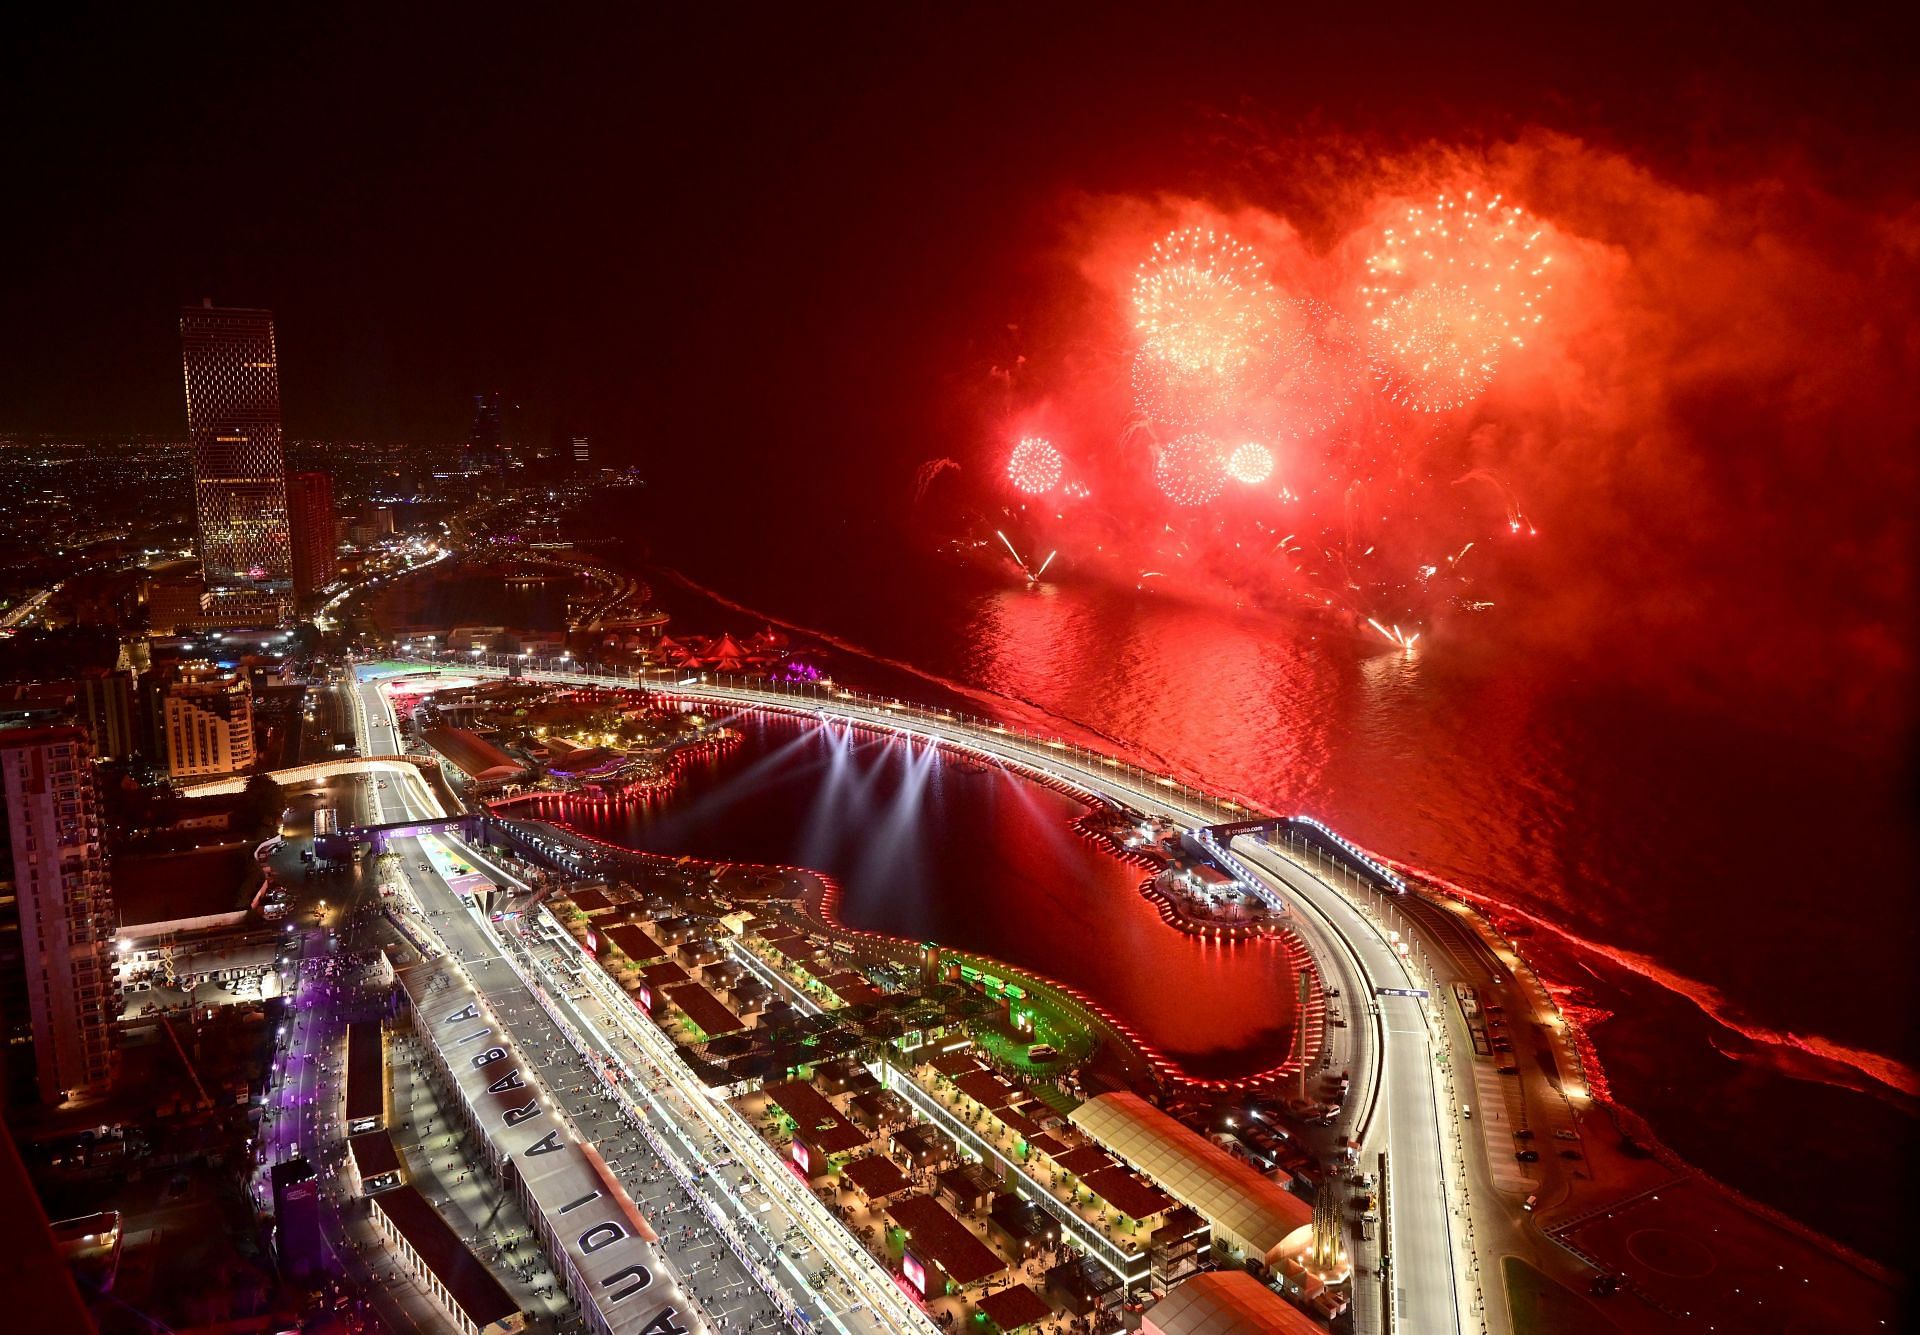 The F1 race in Saudi Arabia drew a lot of flak towards the sport